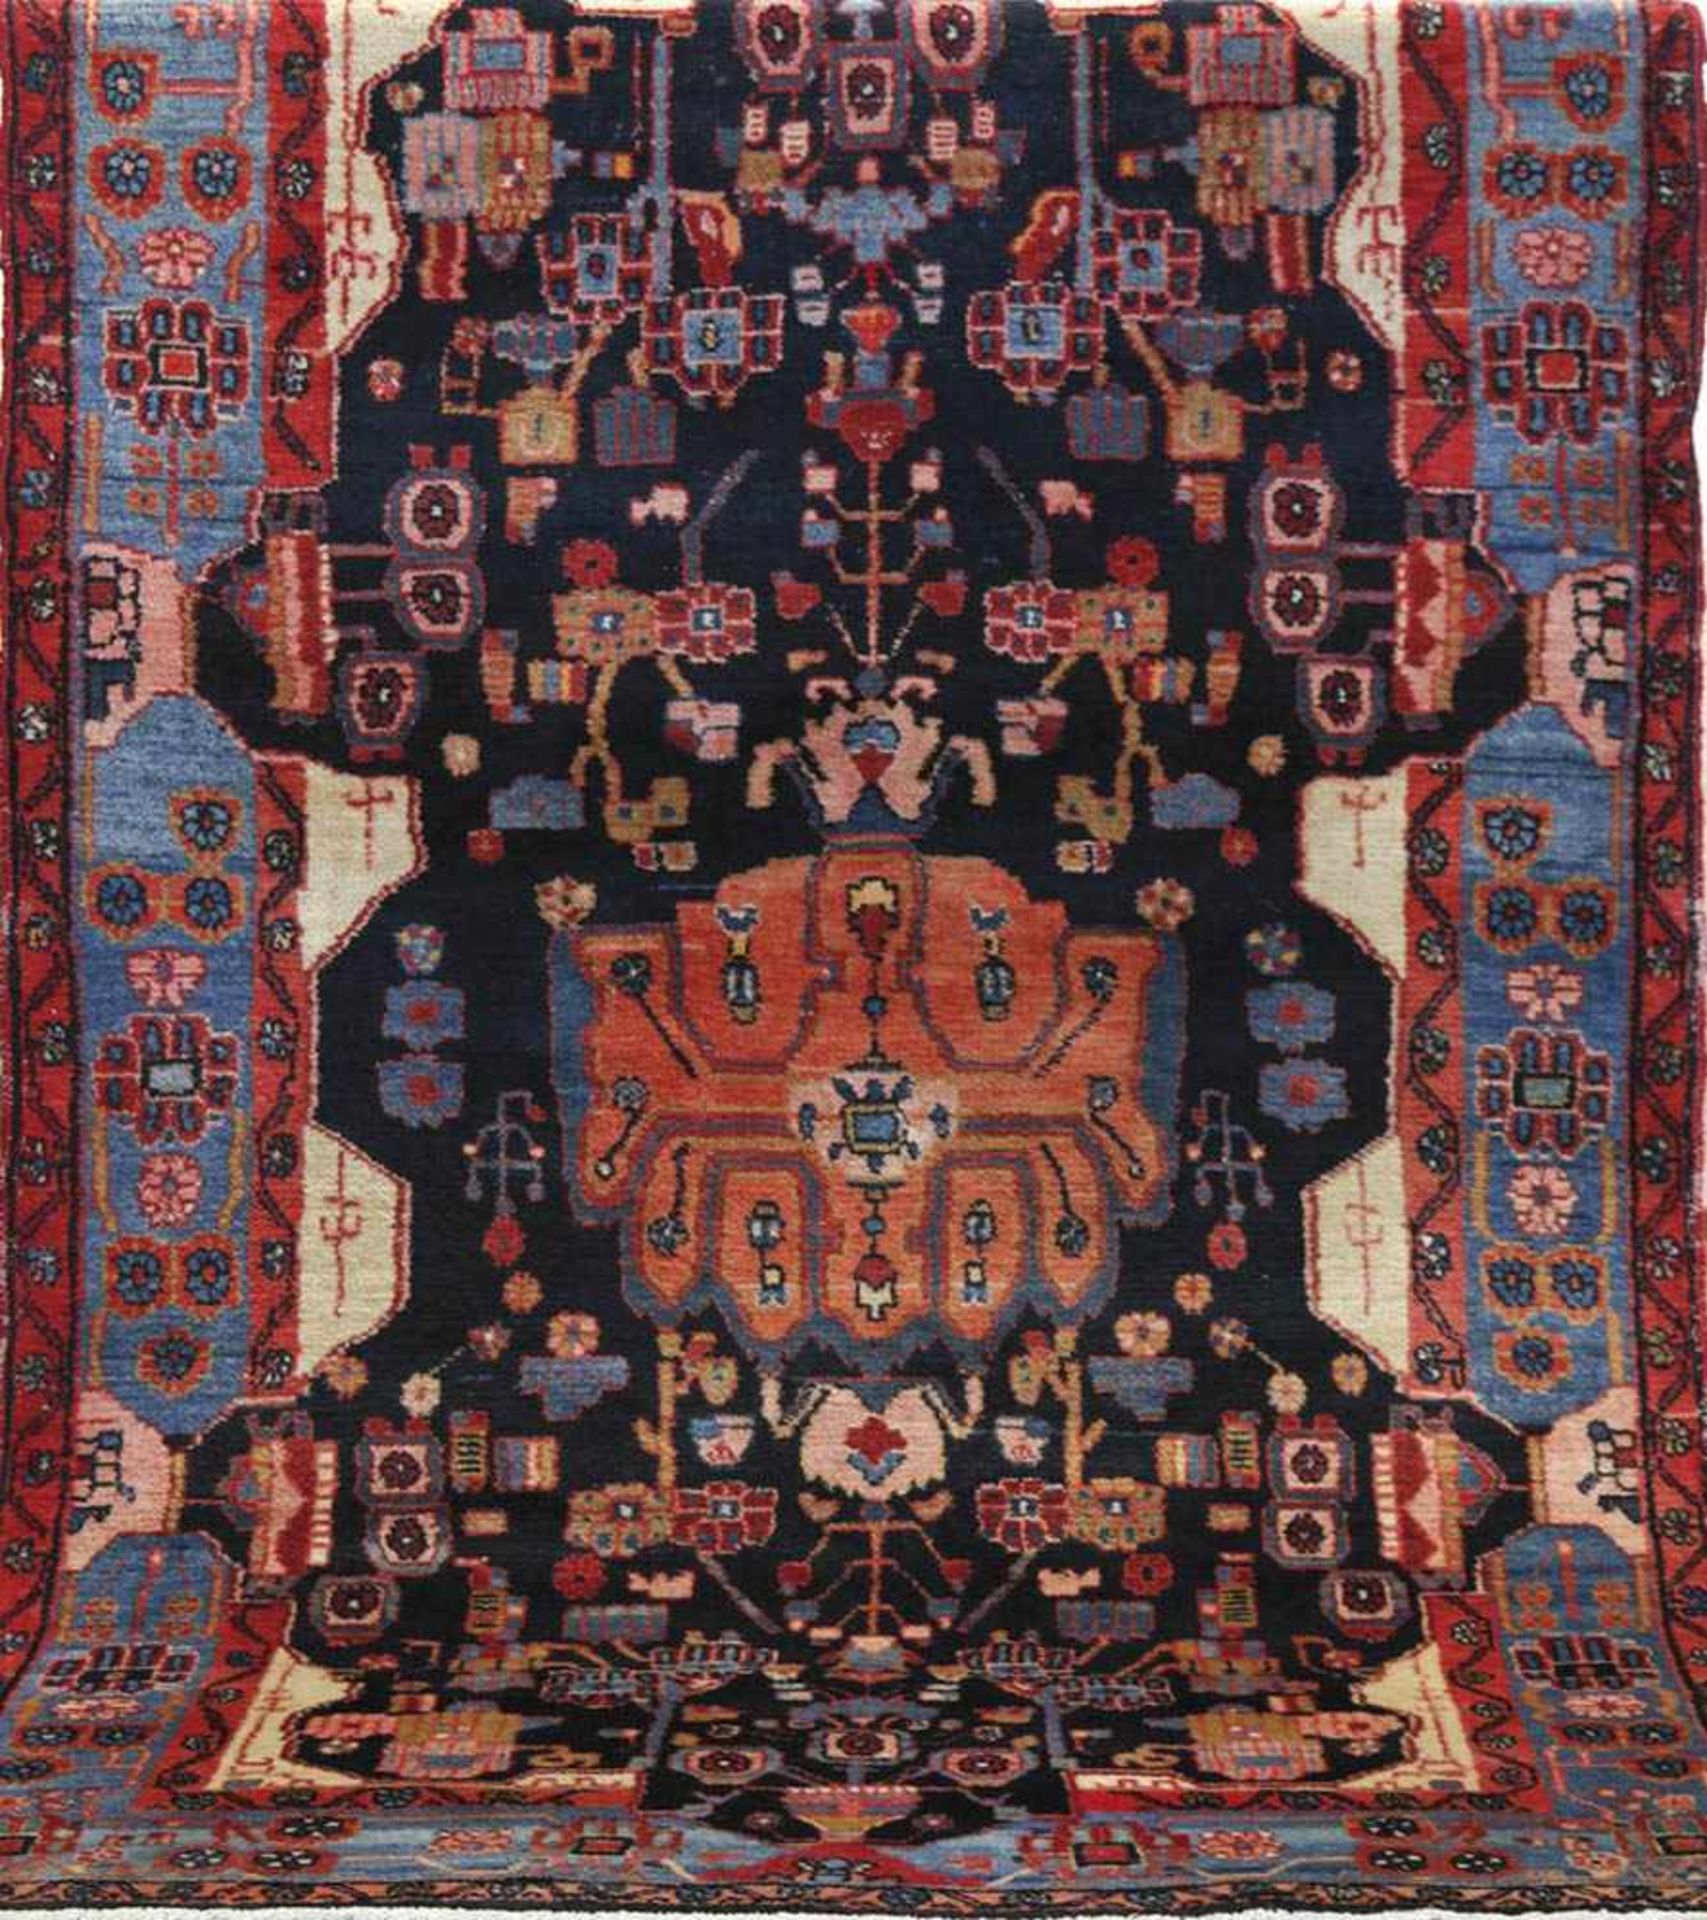 Alter Nahawand, Persien, rot-/blaugrundig, mit zentralem Medaillon und floralen Motiven,Kanten sowie